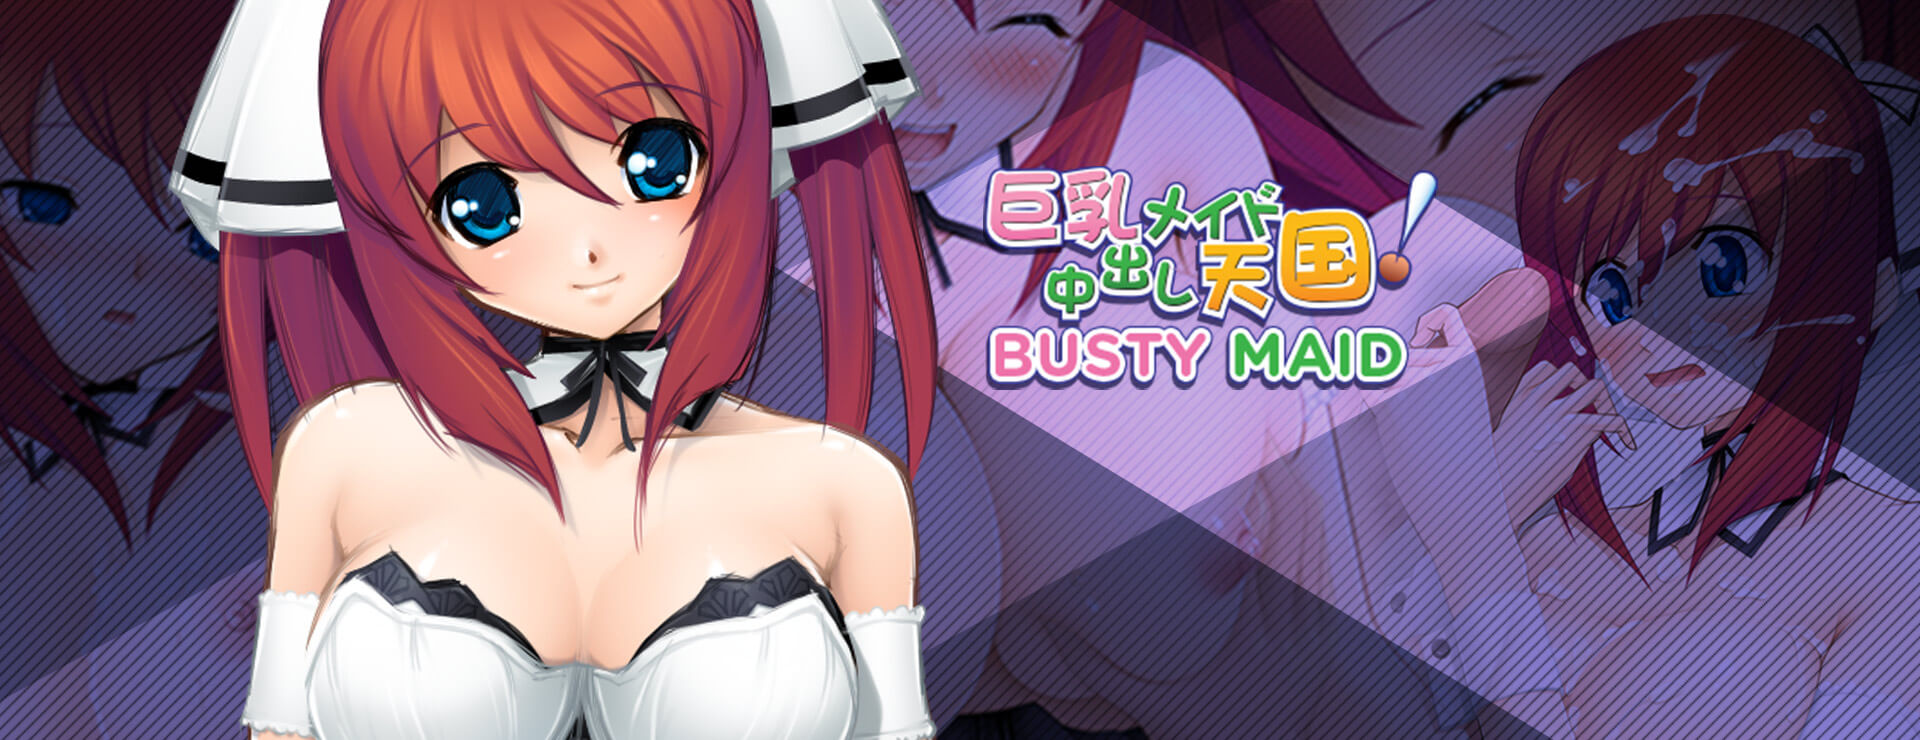 Busty Maid - ビジュアルノベル ゲーム